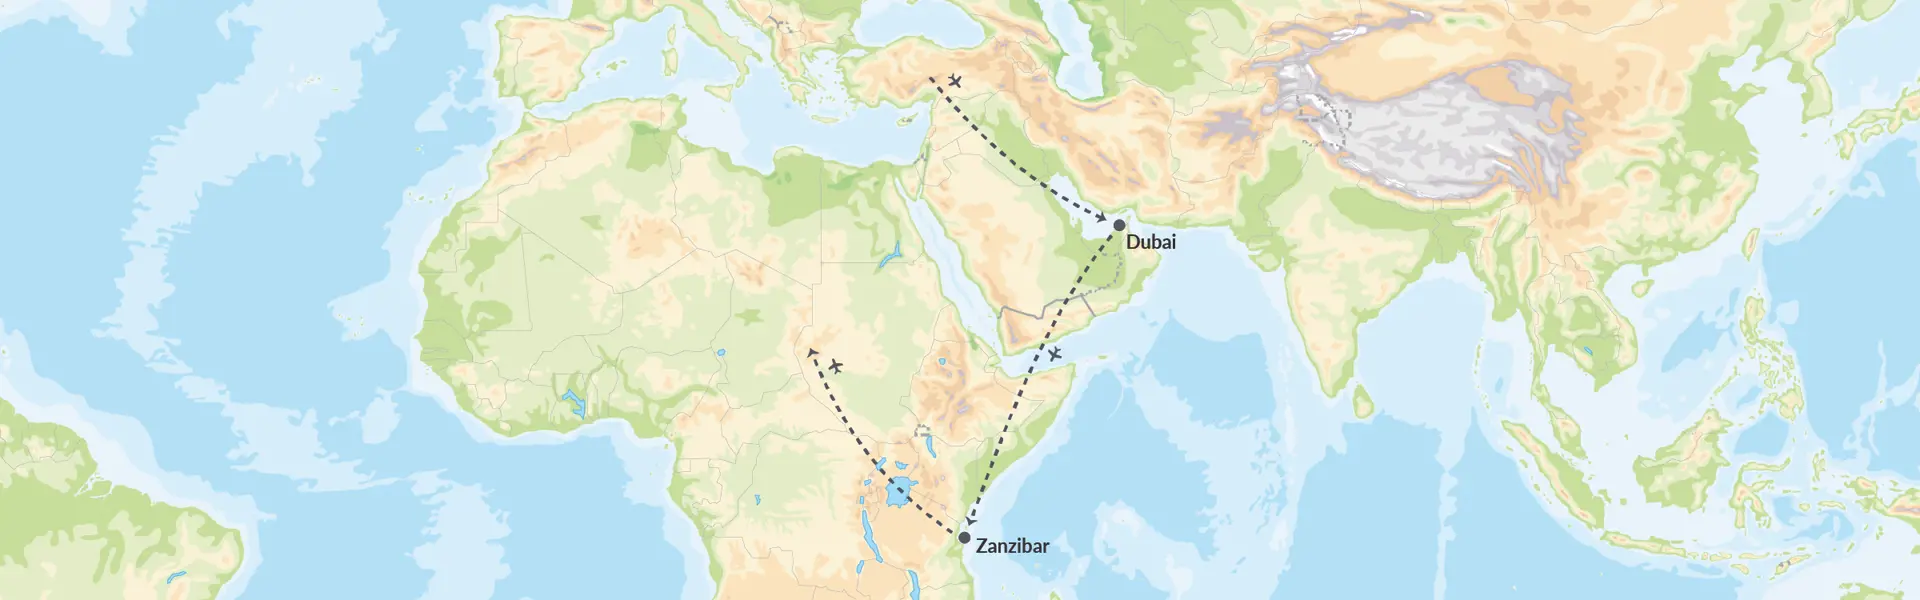 7105 Eksotisk Drømmerejse Til Dubai & Zanzibar Map